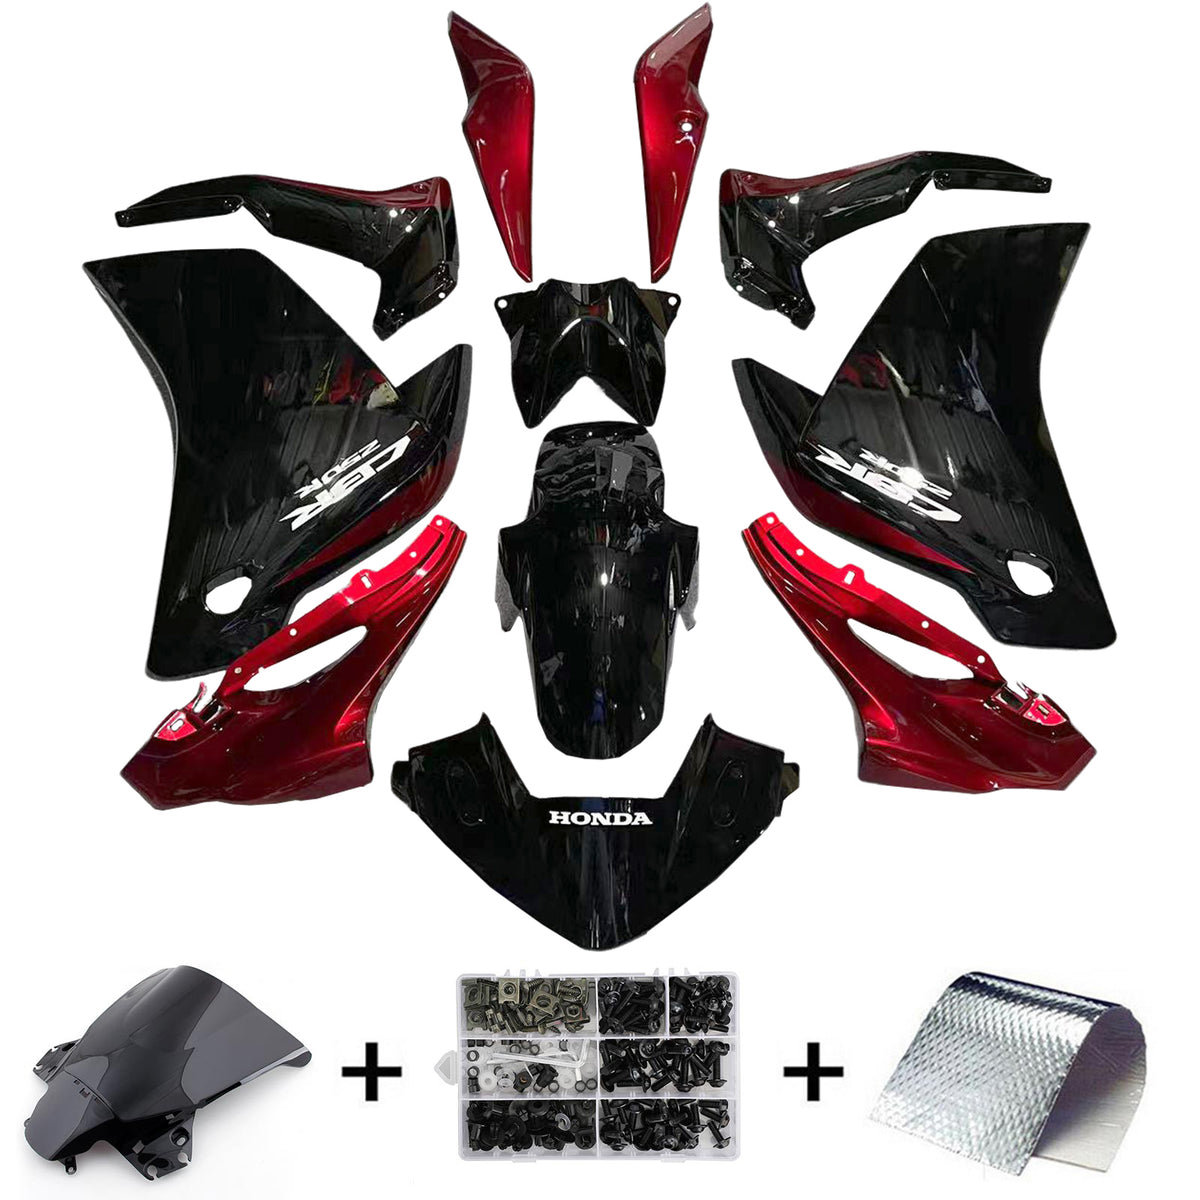 Amotopart Kit carena Honda CBR250R 2011-2013 nero lucido e rosso